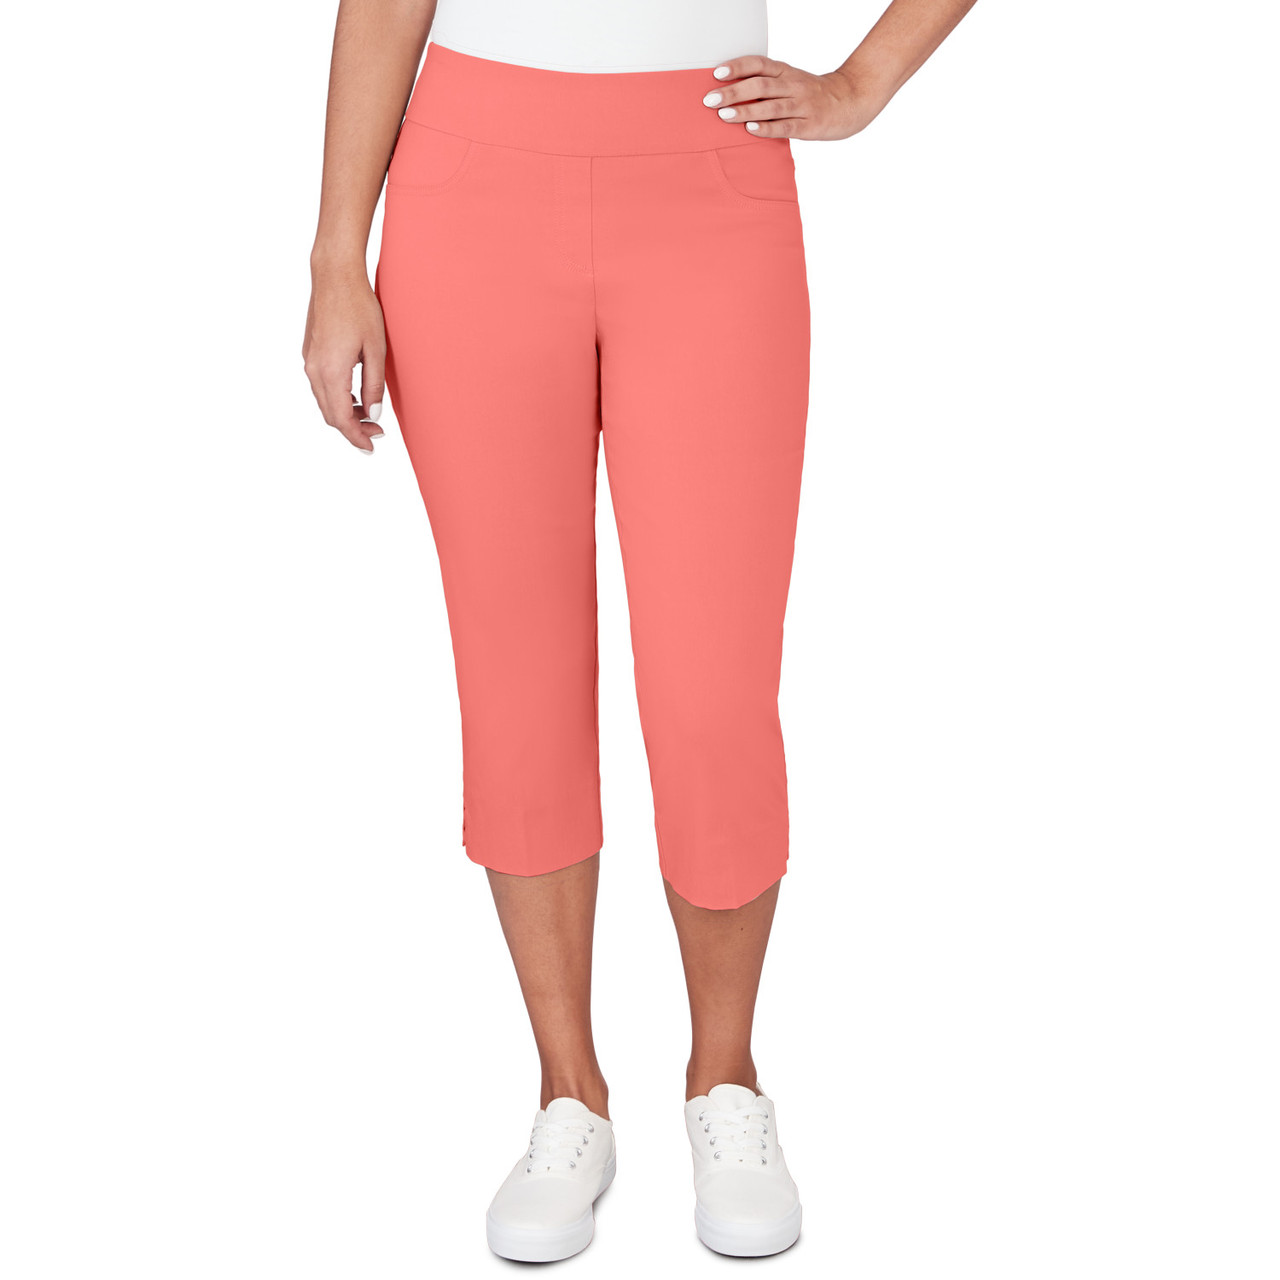 Elle NWT Olive Green City Chic Capri Pants 2 - $30 (31% Off Retail